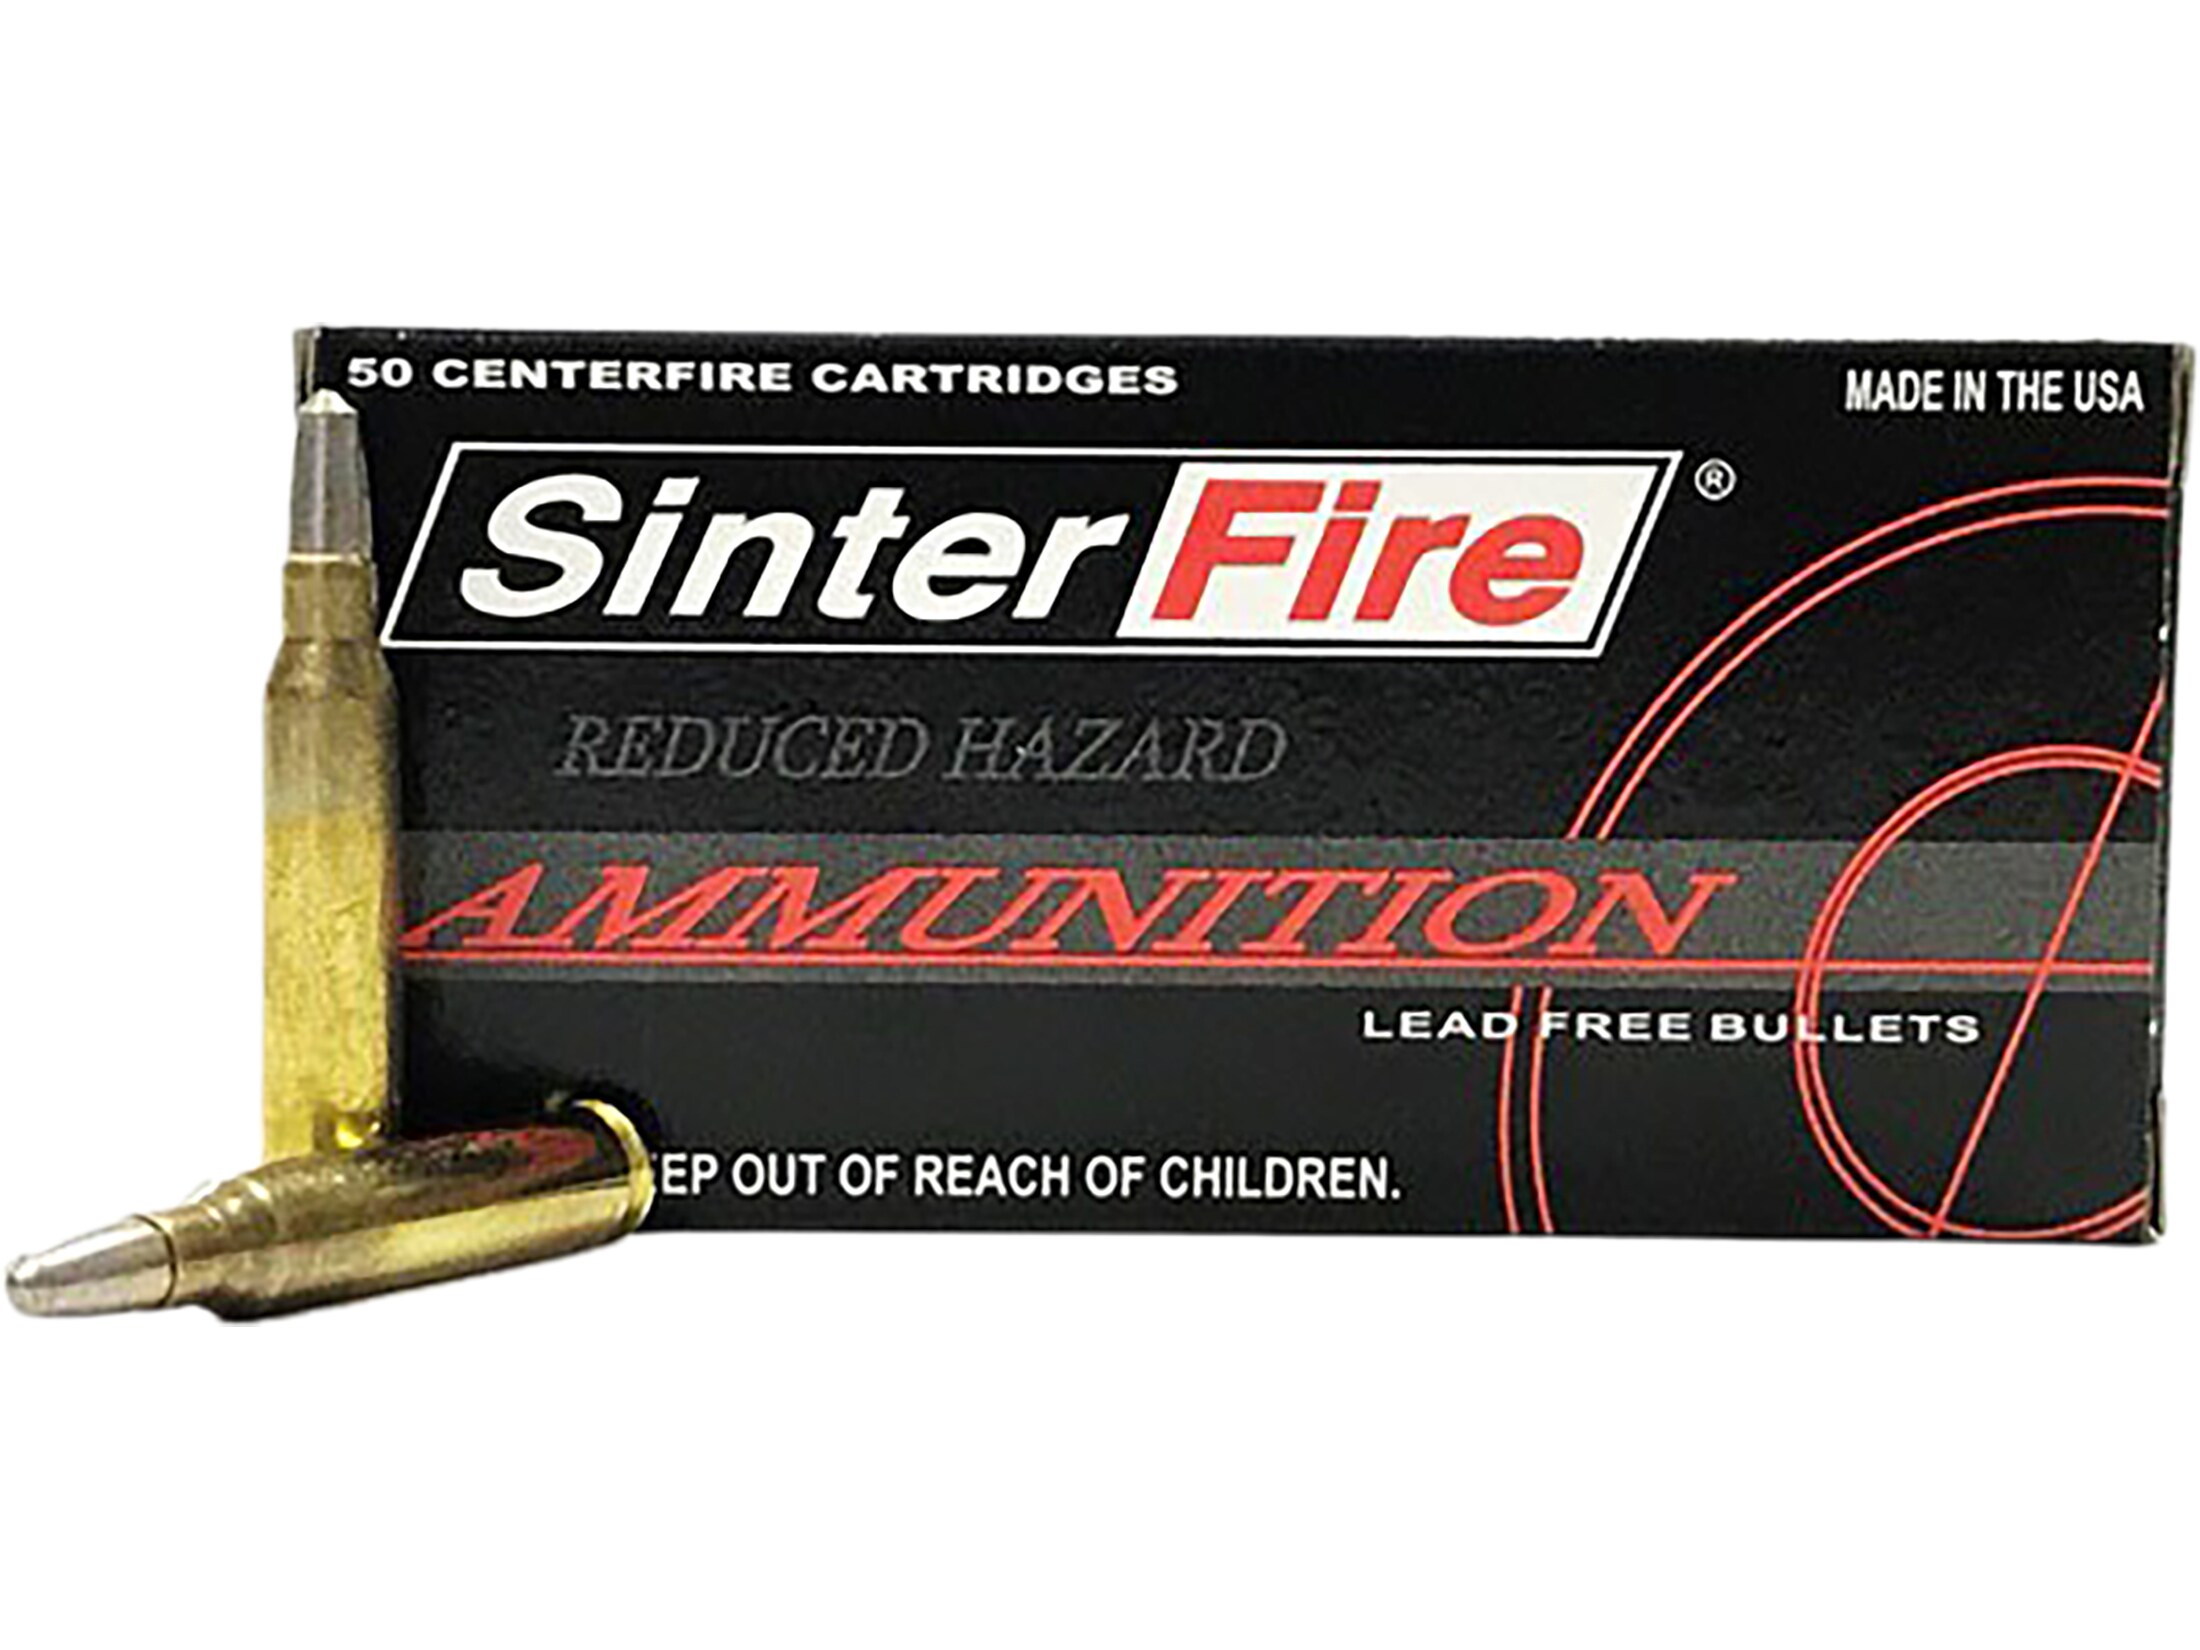 SinterFire Reduced Hazard Ammunition 223 Remington 55 Grain Frangible Round Nose Lead Free